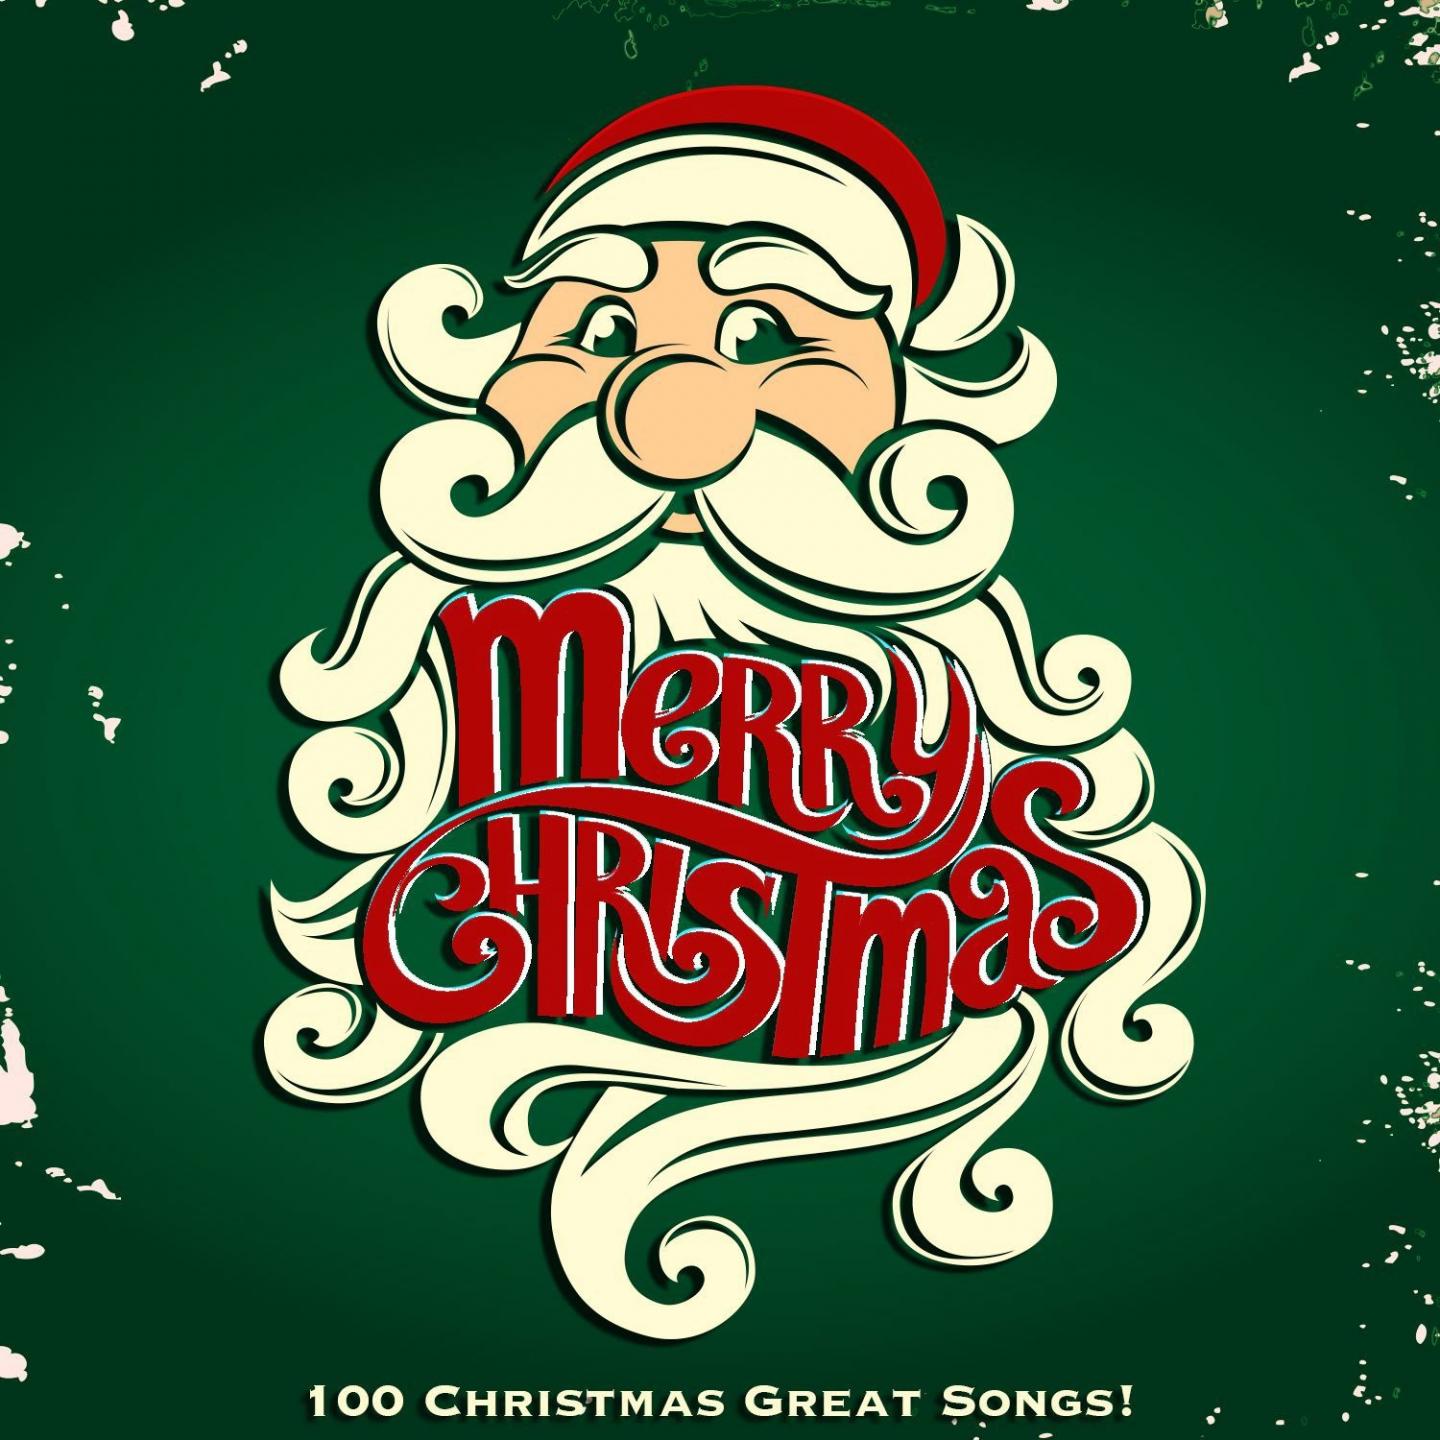 Christmas Medley: the First Noel/O Little Town of Bethlehem/Silent Night